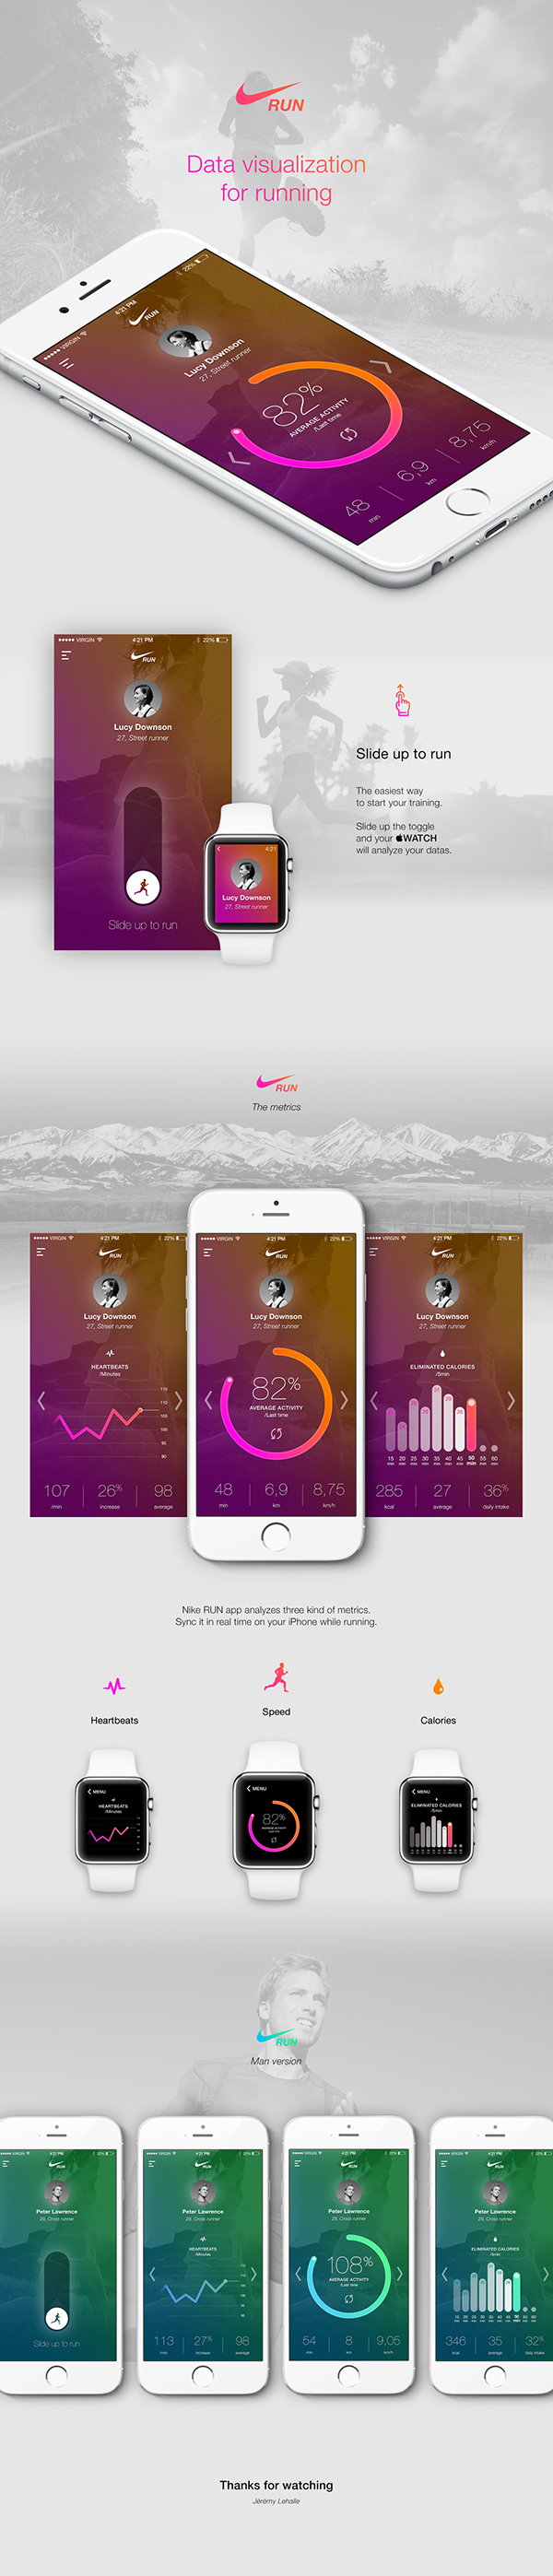 Nike RUN mobile & watch app